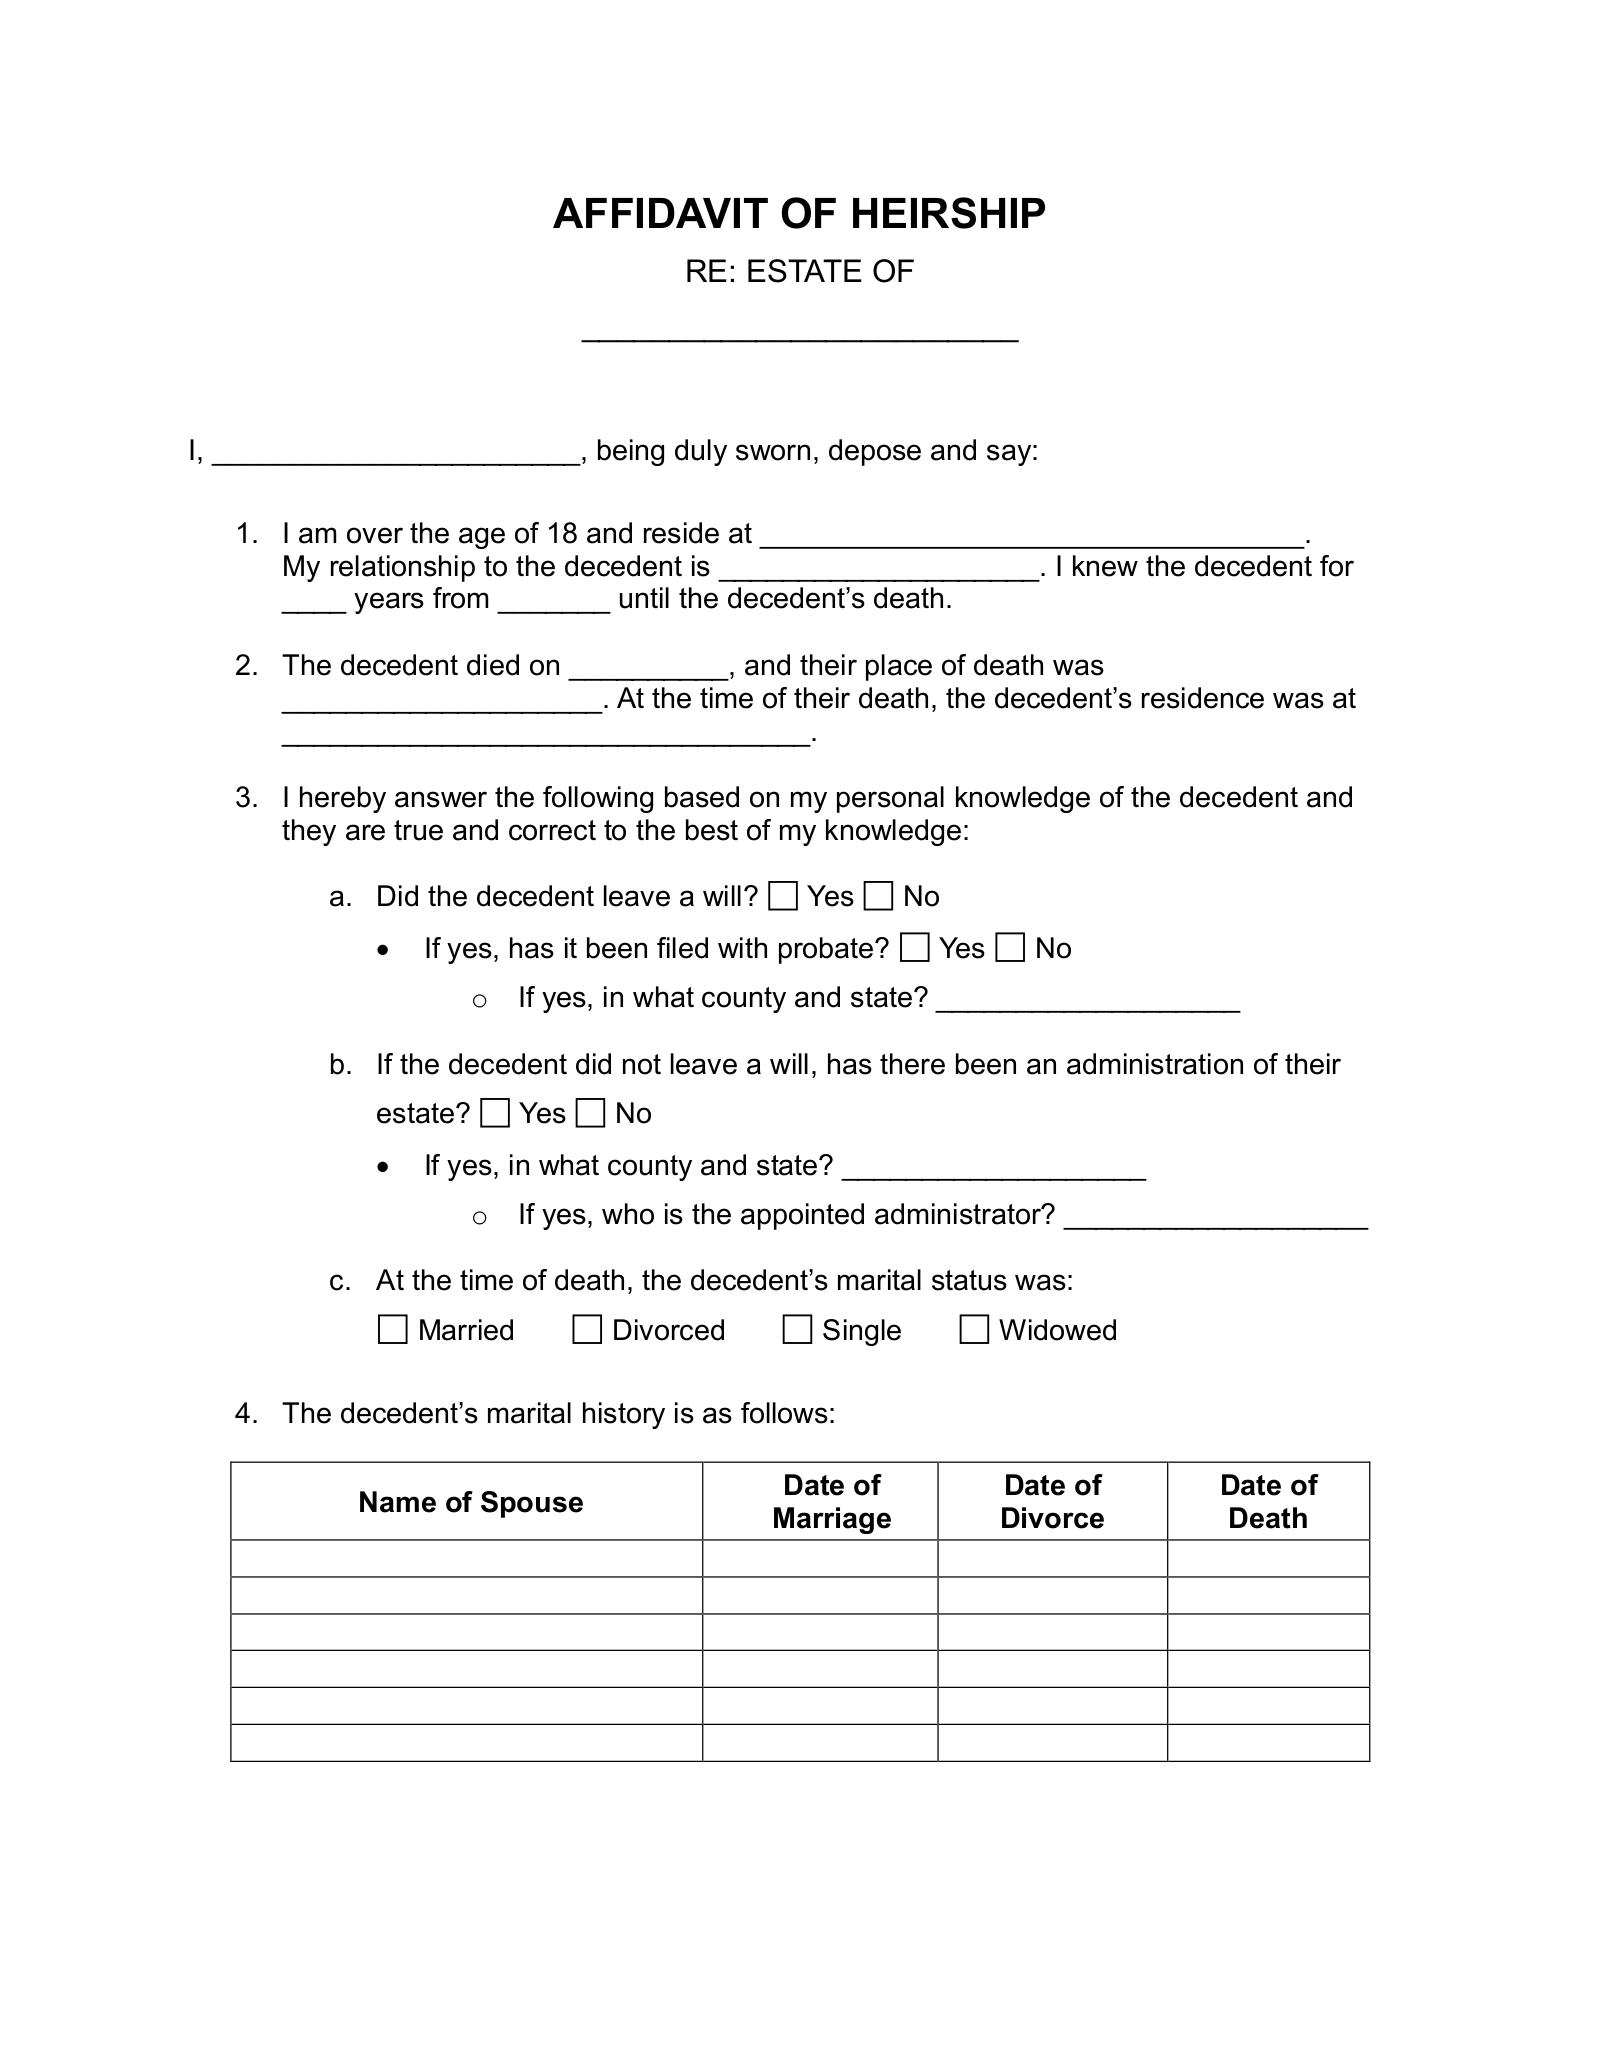 Affidavit of Heirship Form